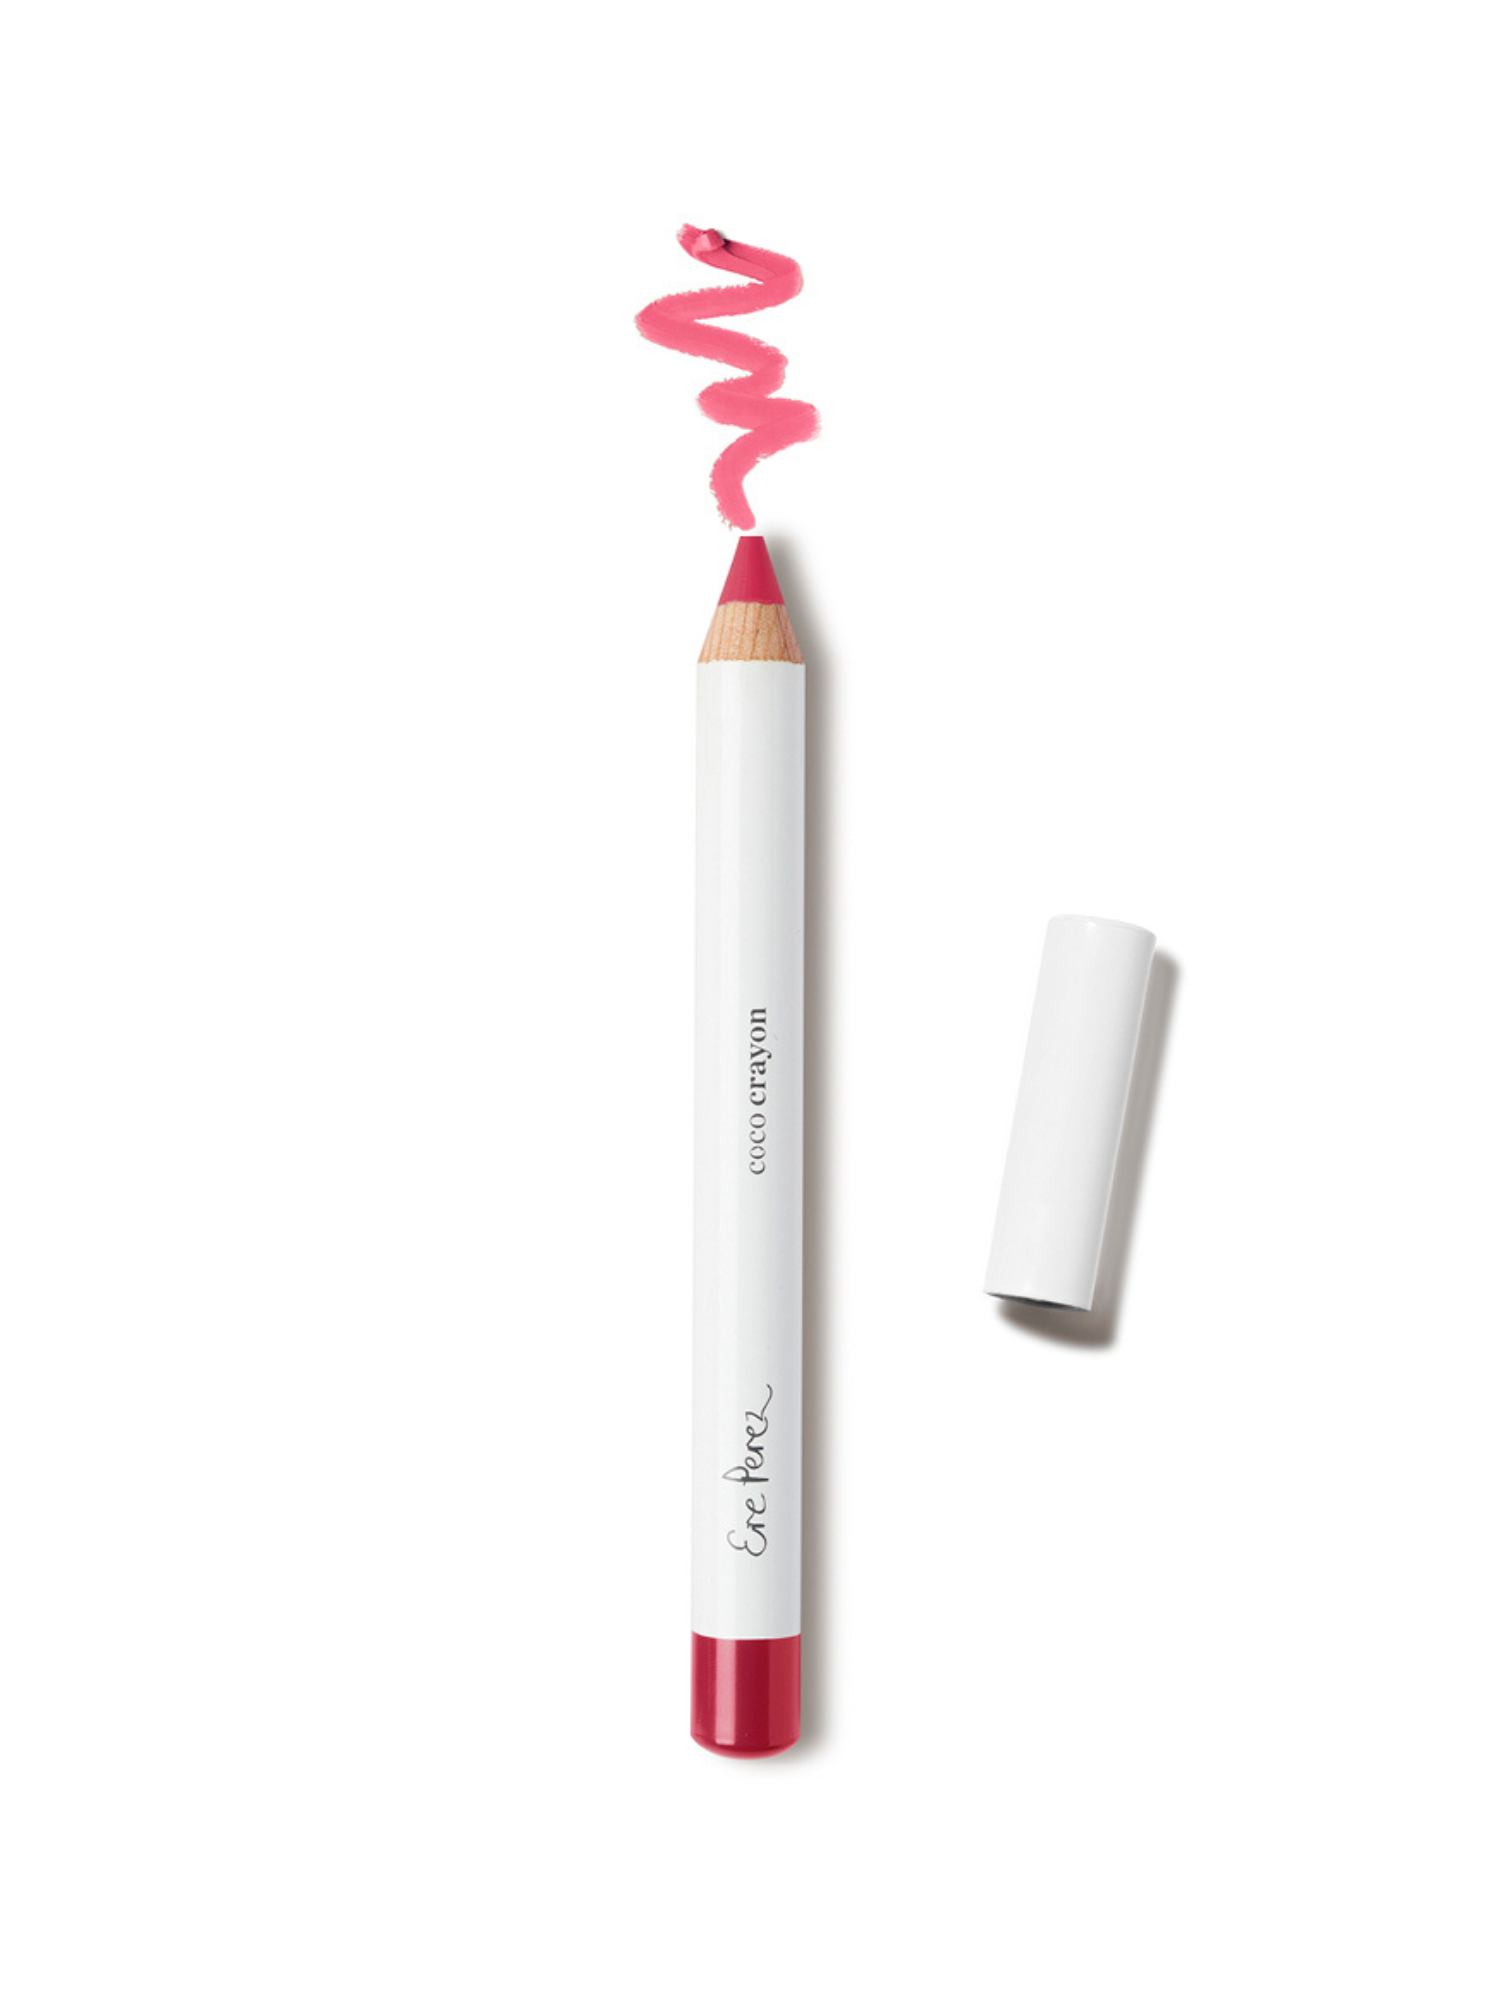 Ere Perez | Coco Crayon Babe | Lip | Natural Makeup | Natuurlijke Make-up | Lippenstift | Lipstick | Lip pencil | Lip potlood